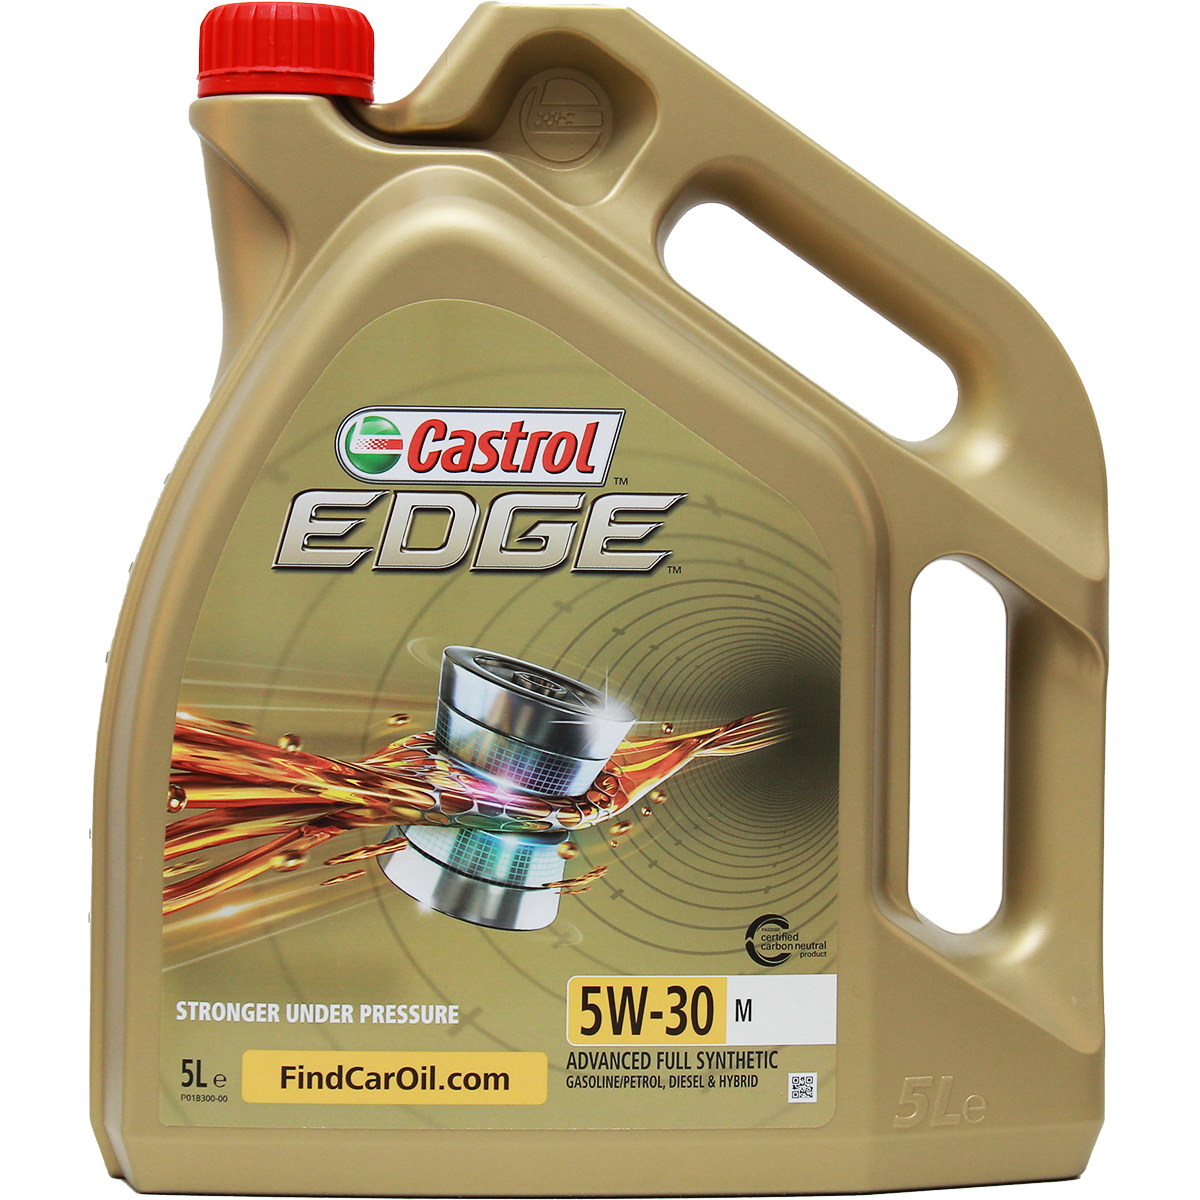 Castrol Edge 5W-30 M 2x5 Liter